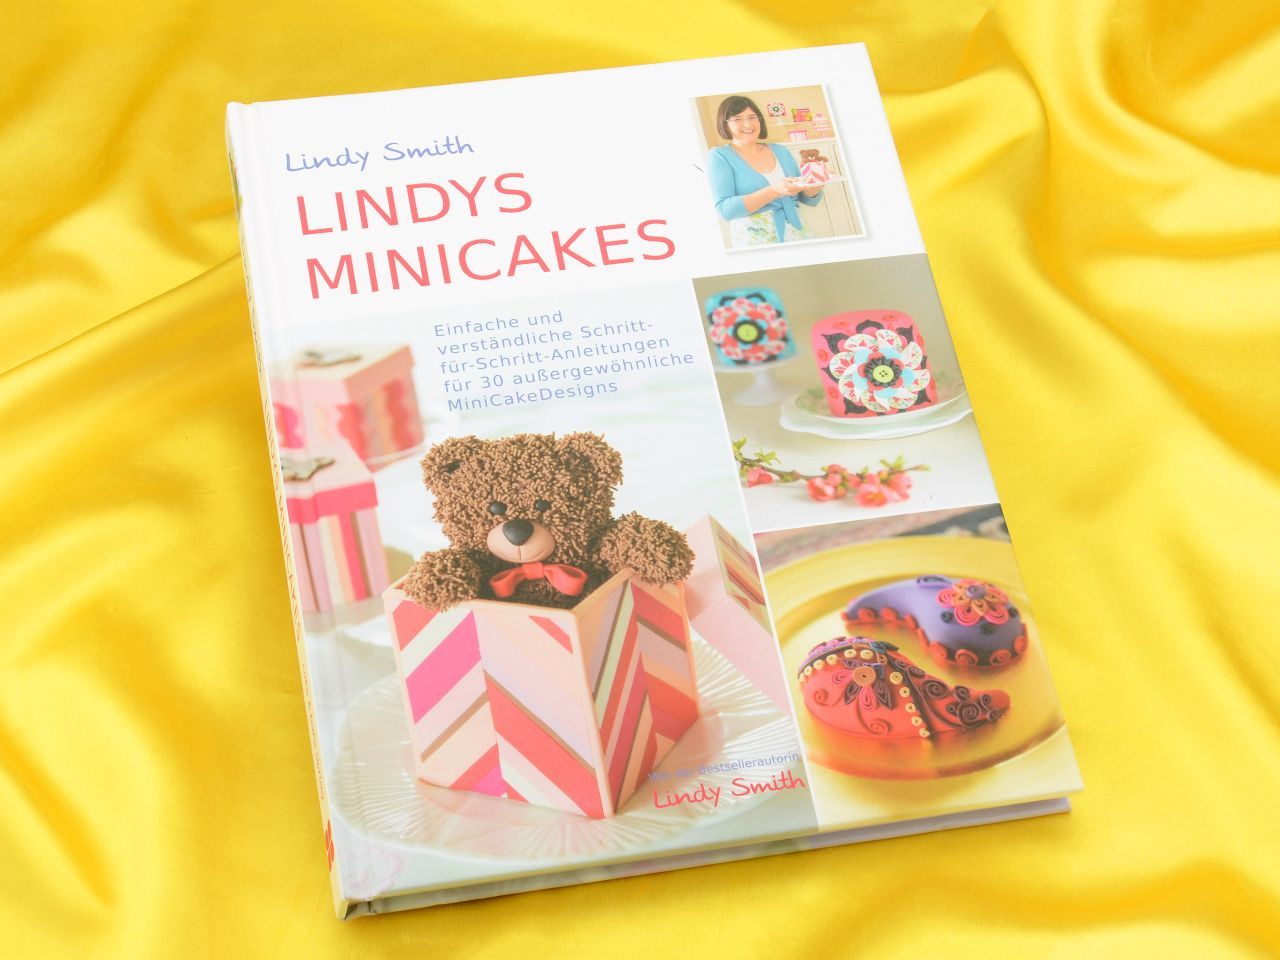 Lindys Minicakes - Lindy Smith von Cake & Bake Verlag